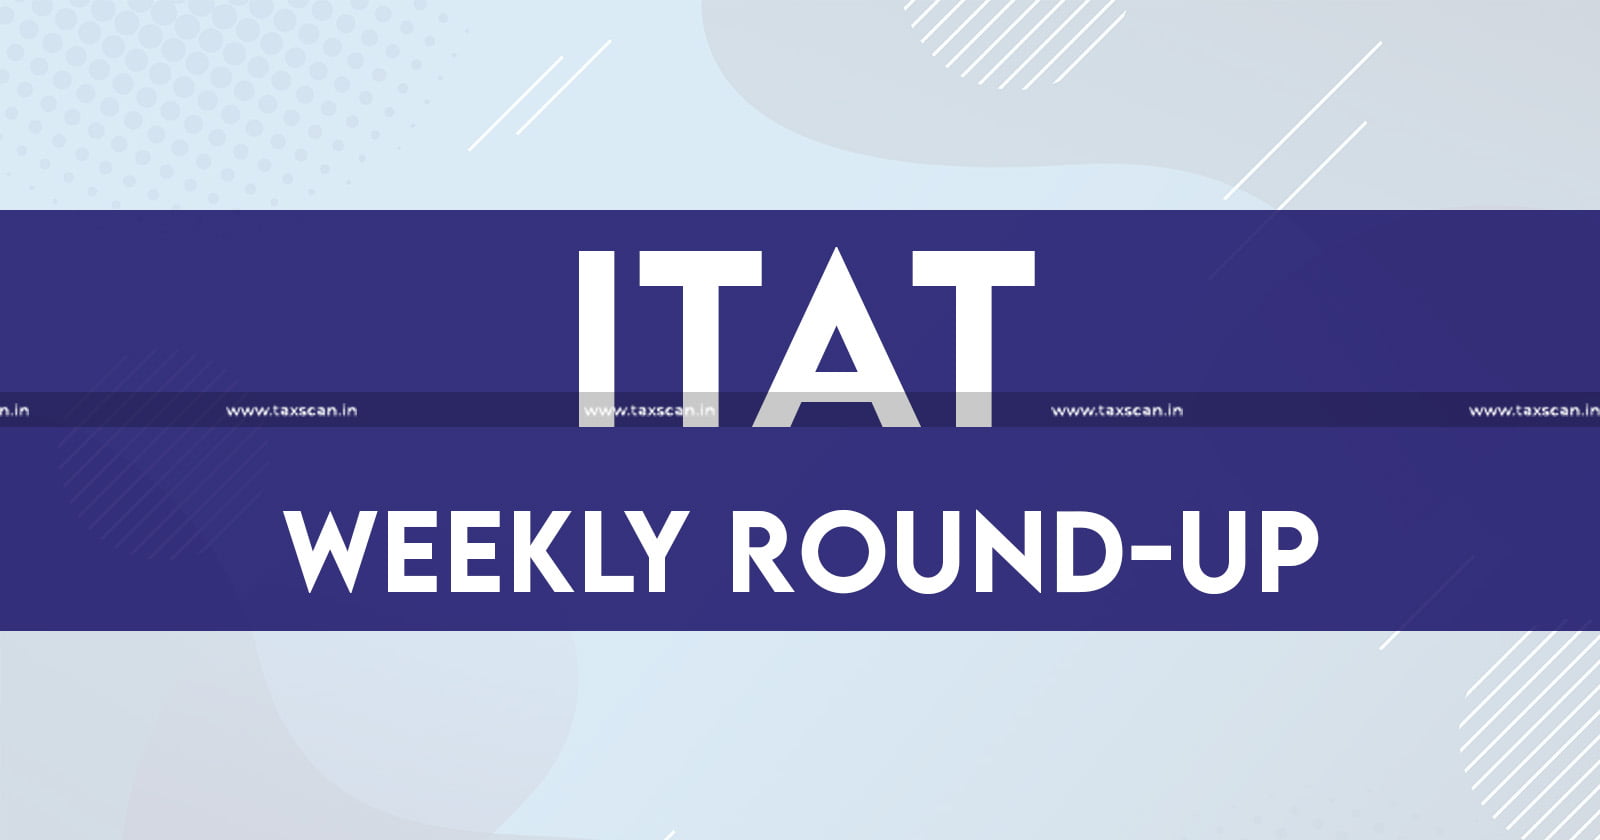 ITAT - Weekly round up - round up - ITAT WeeklyRound-Up - Taxscan